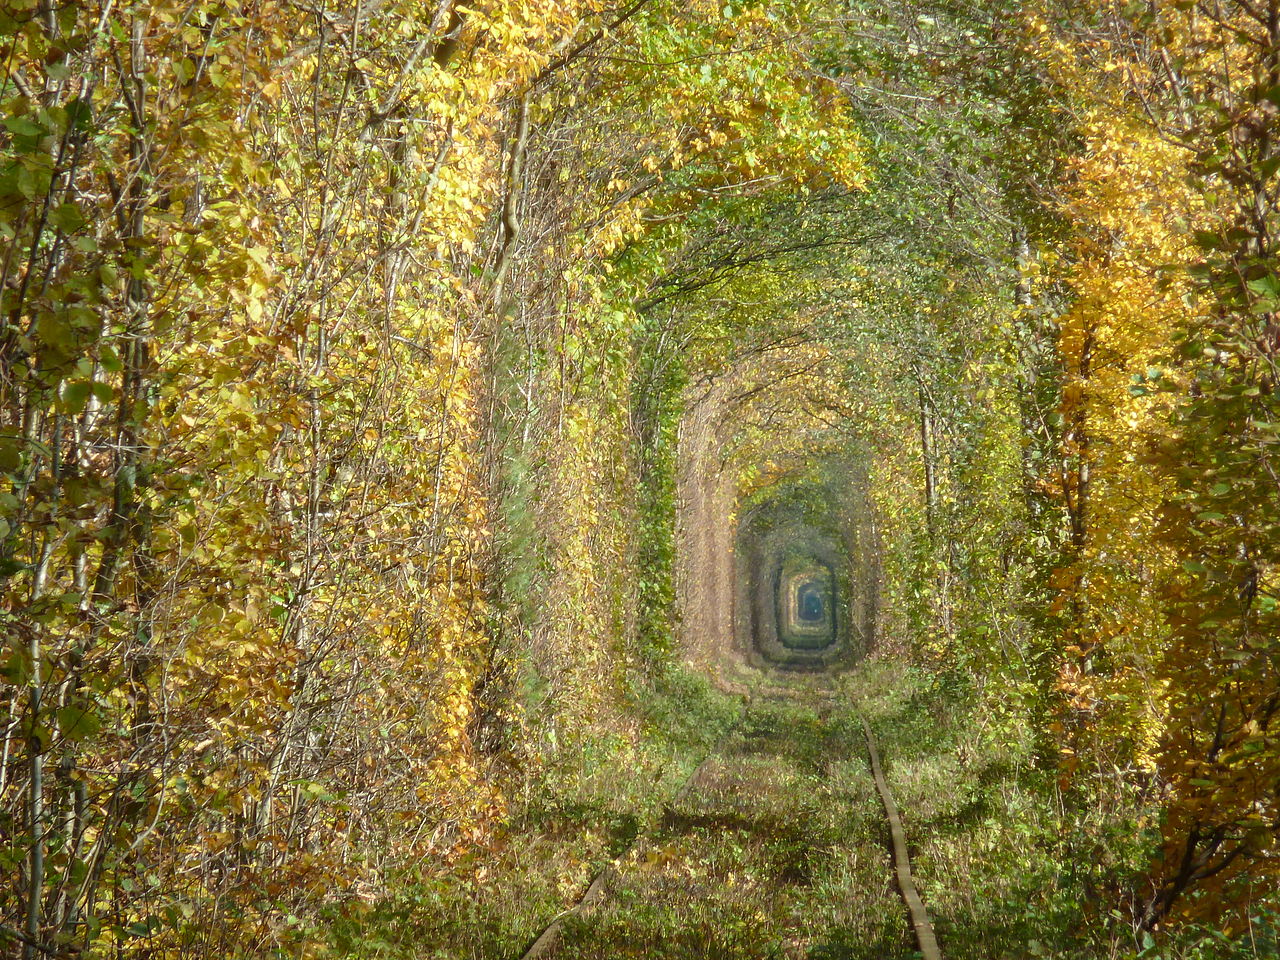 Love tunnel